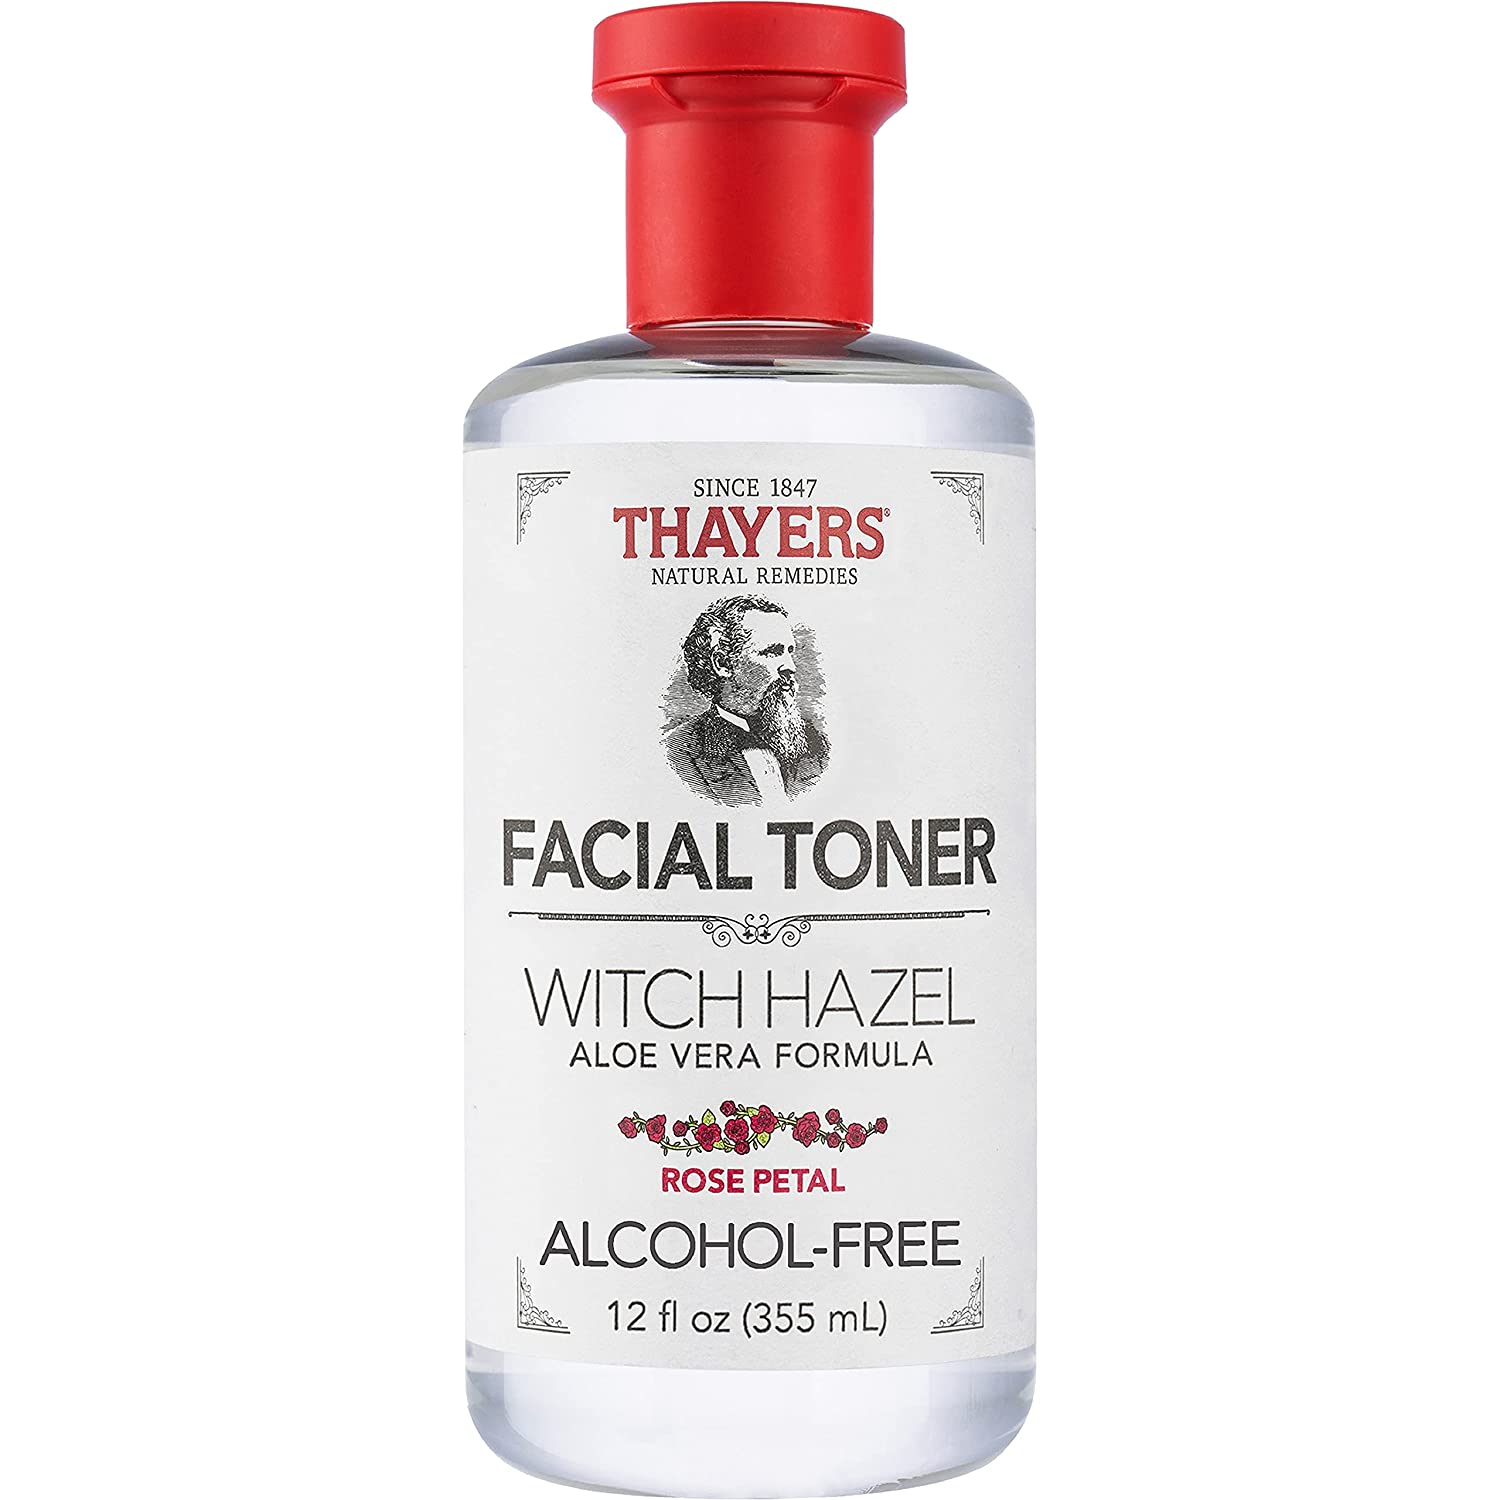 12-Oz Thayers Alcohol-Free Witch Hazel Facial Toner (Aloe Vera Formula/Rose Petal) $6.71 w/ S&S + Free Shipping w/ Prime or $25+